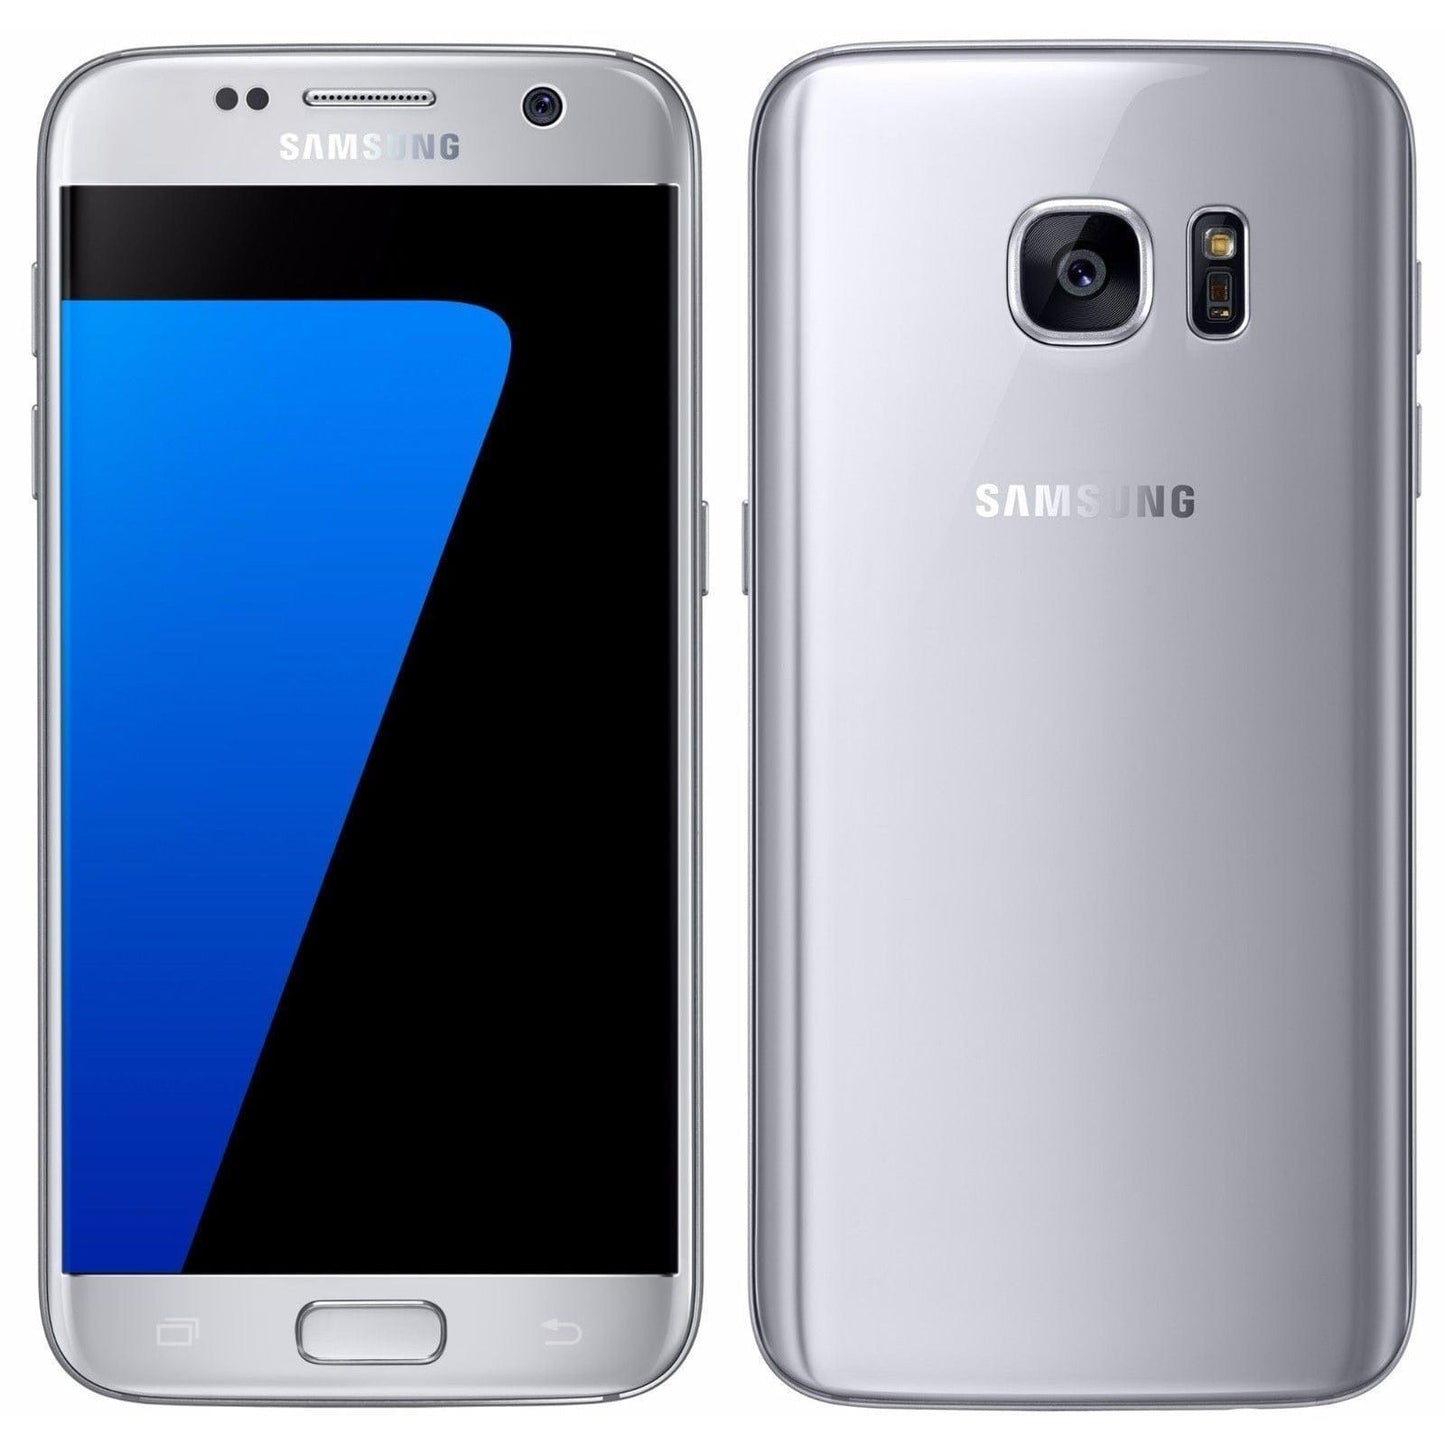 Samsung Galaxy S7 Edge - 32 GB - Silver - Unlocked - GSM